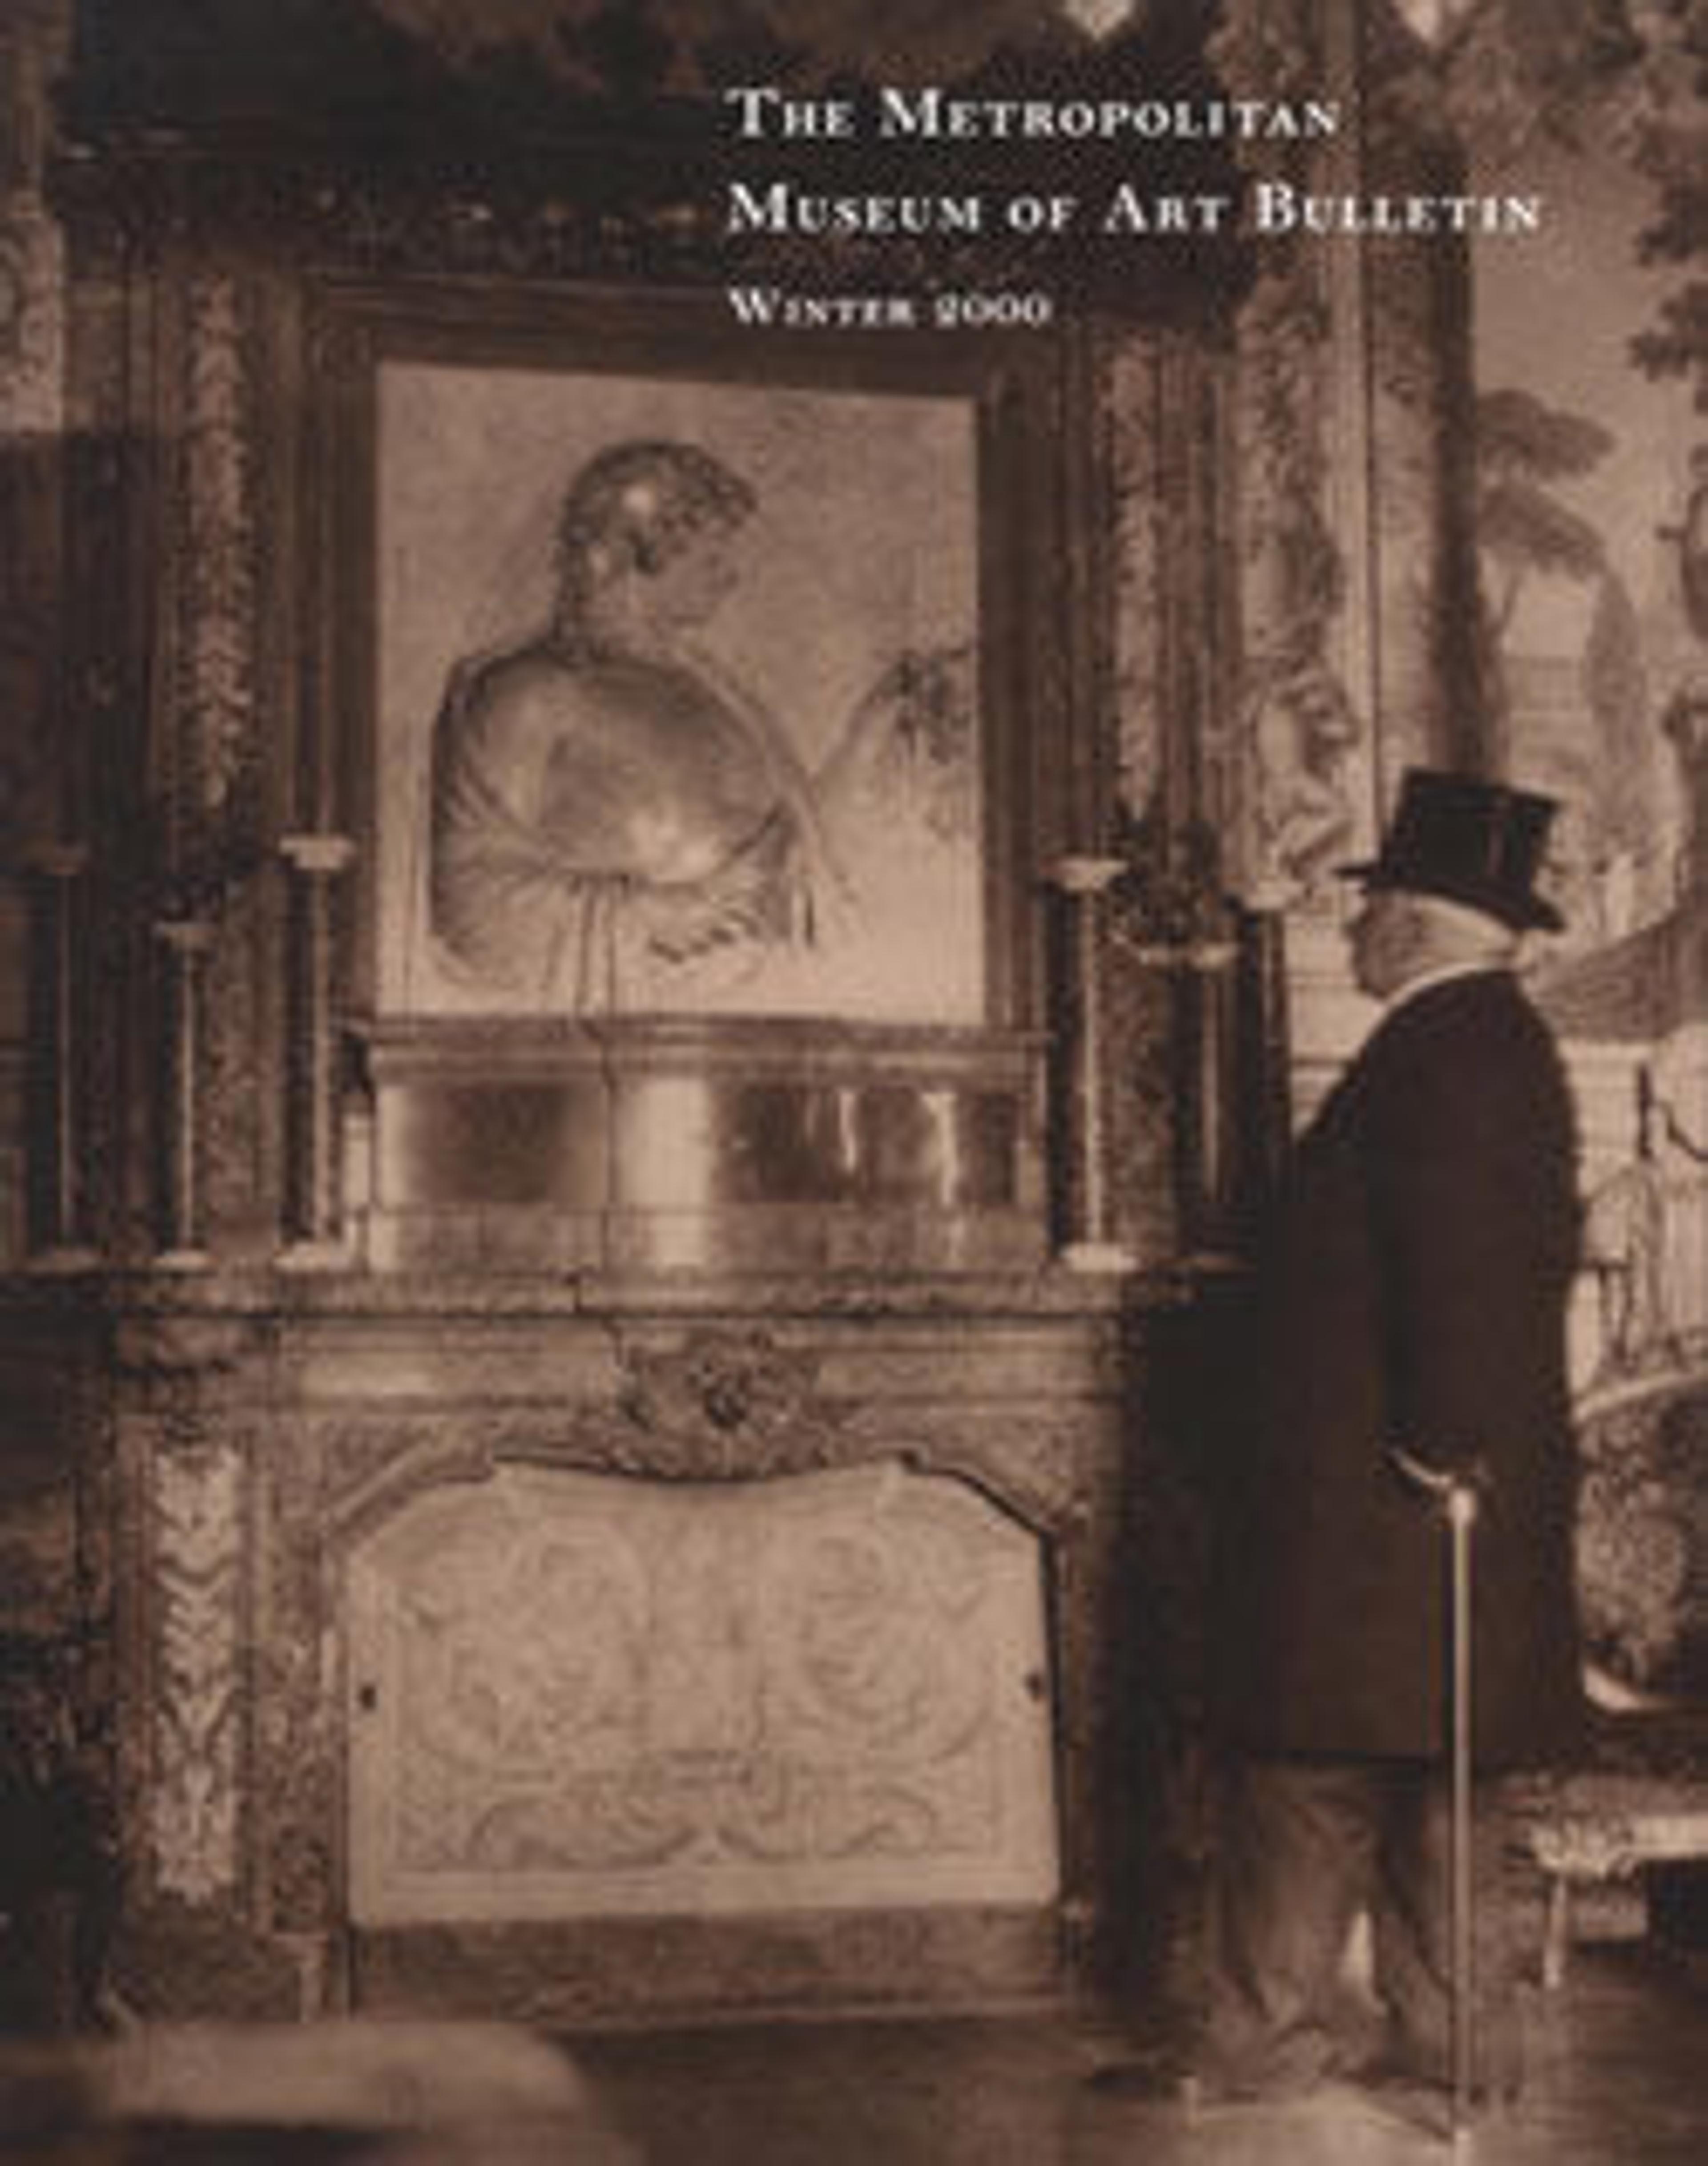 "J. Pierpont Morgan: Financier and Collector": The Metropolitan Museum of Art Bulletin, v. 57 no. 3 (Winter, 2000)